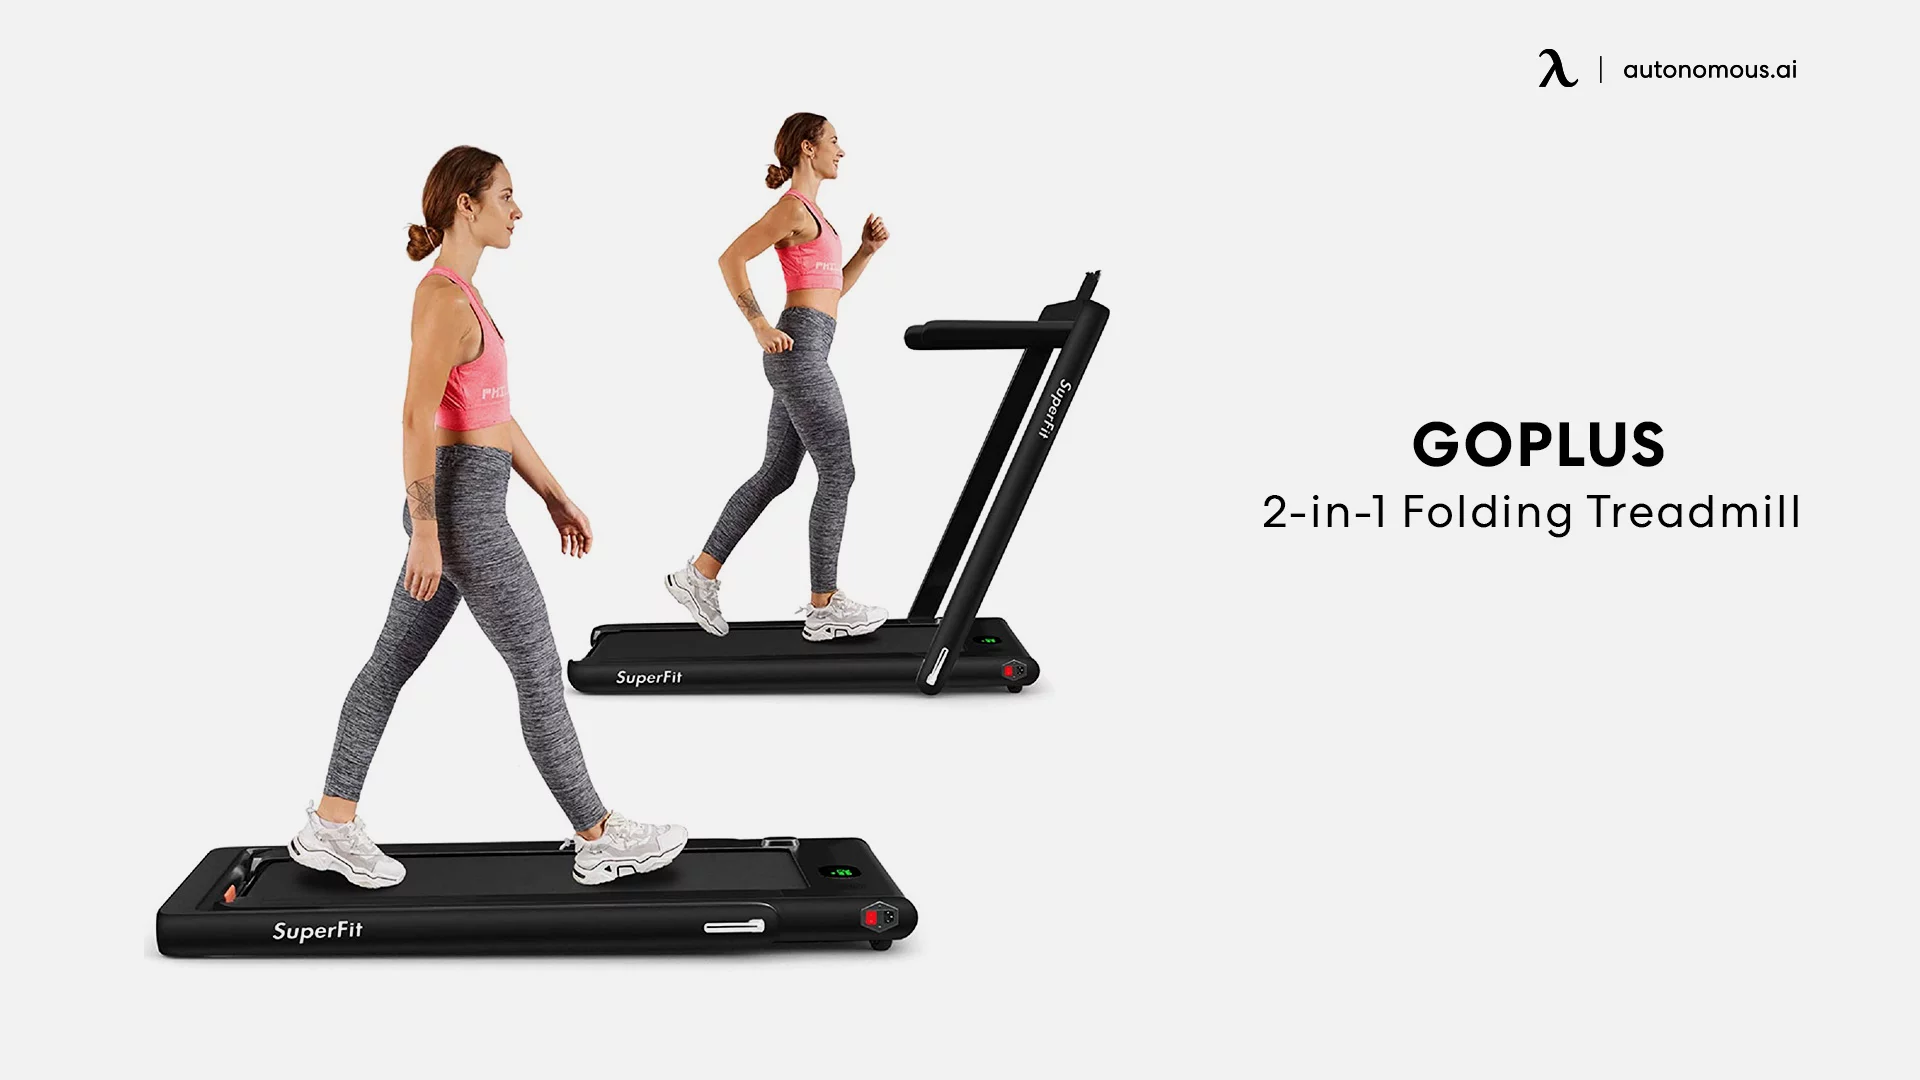 Goplus 2 in 1 Folding Treadmill - Superfit Under Desk Electric Treadmill with APP Control